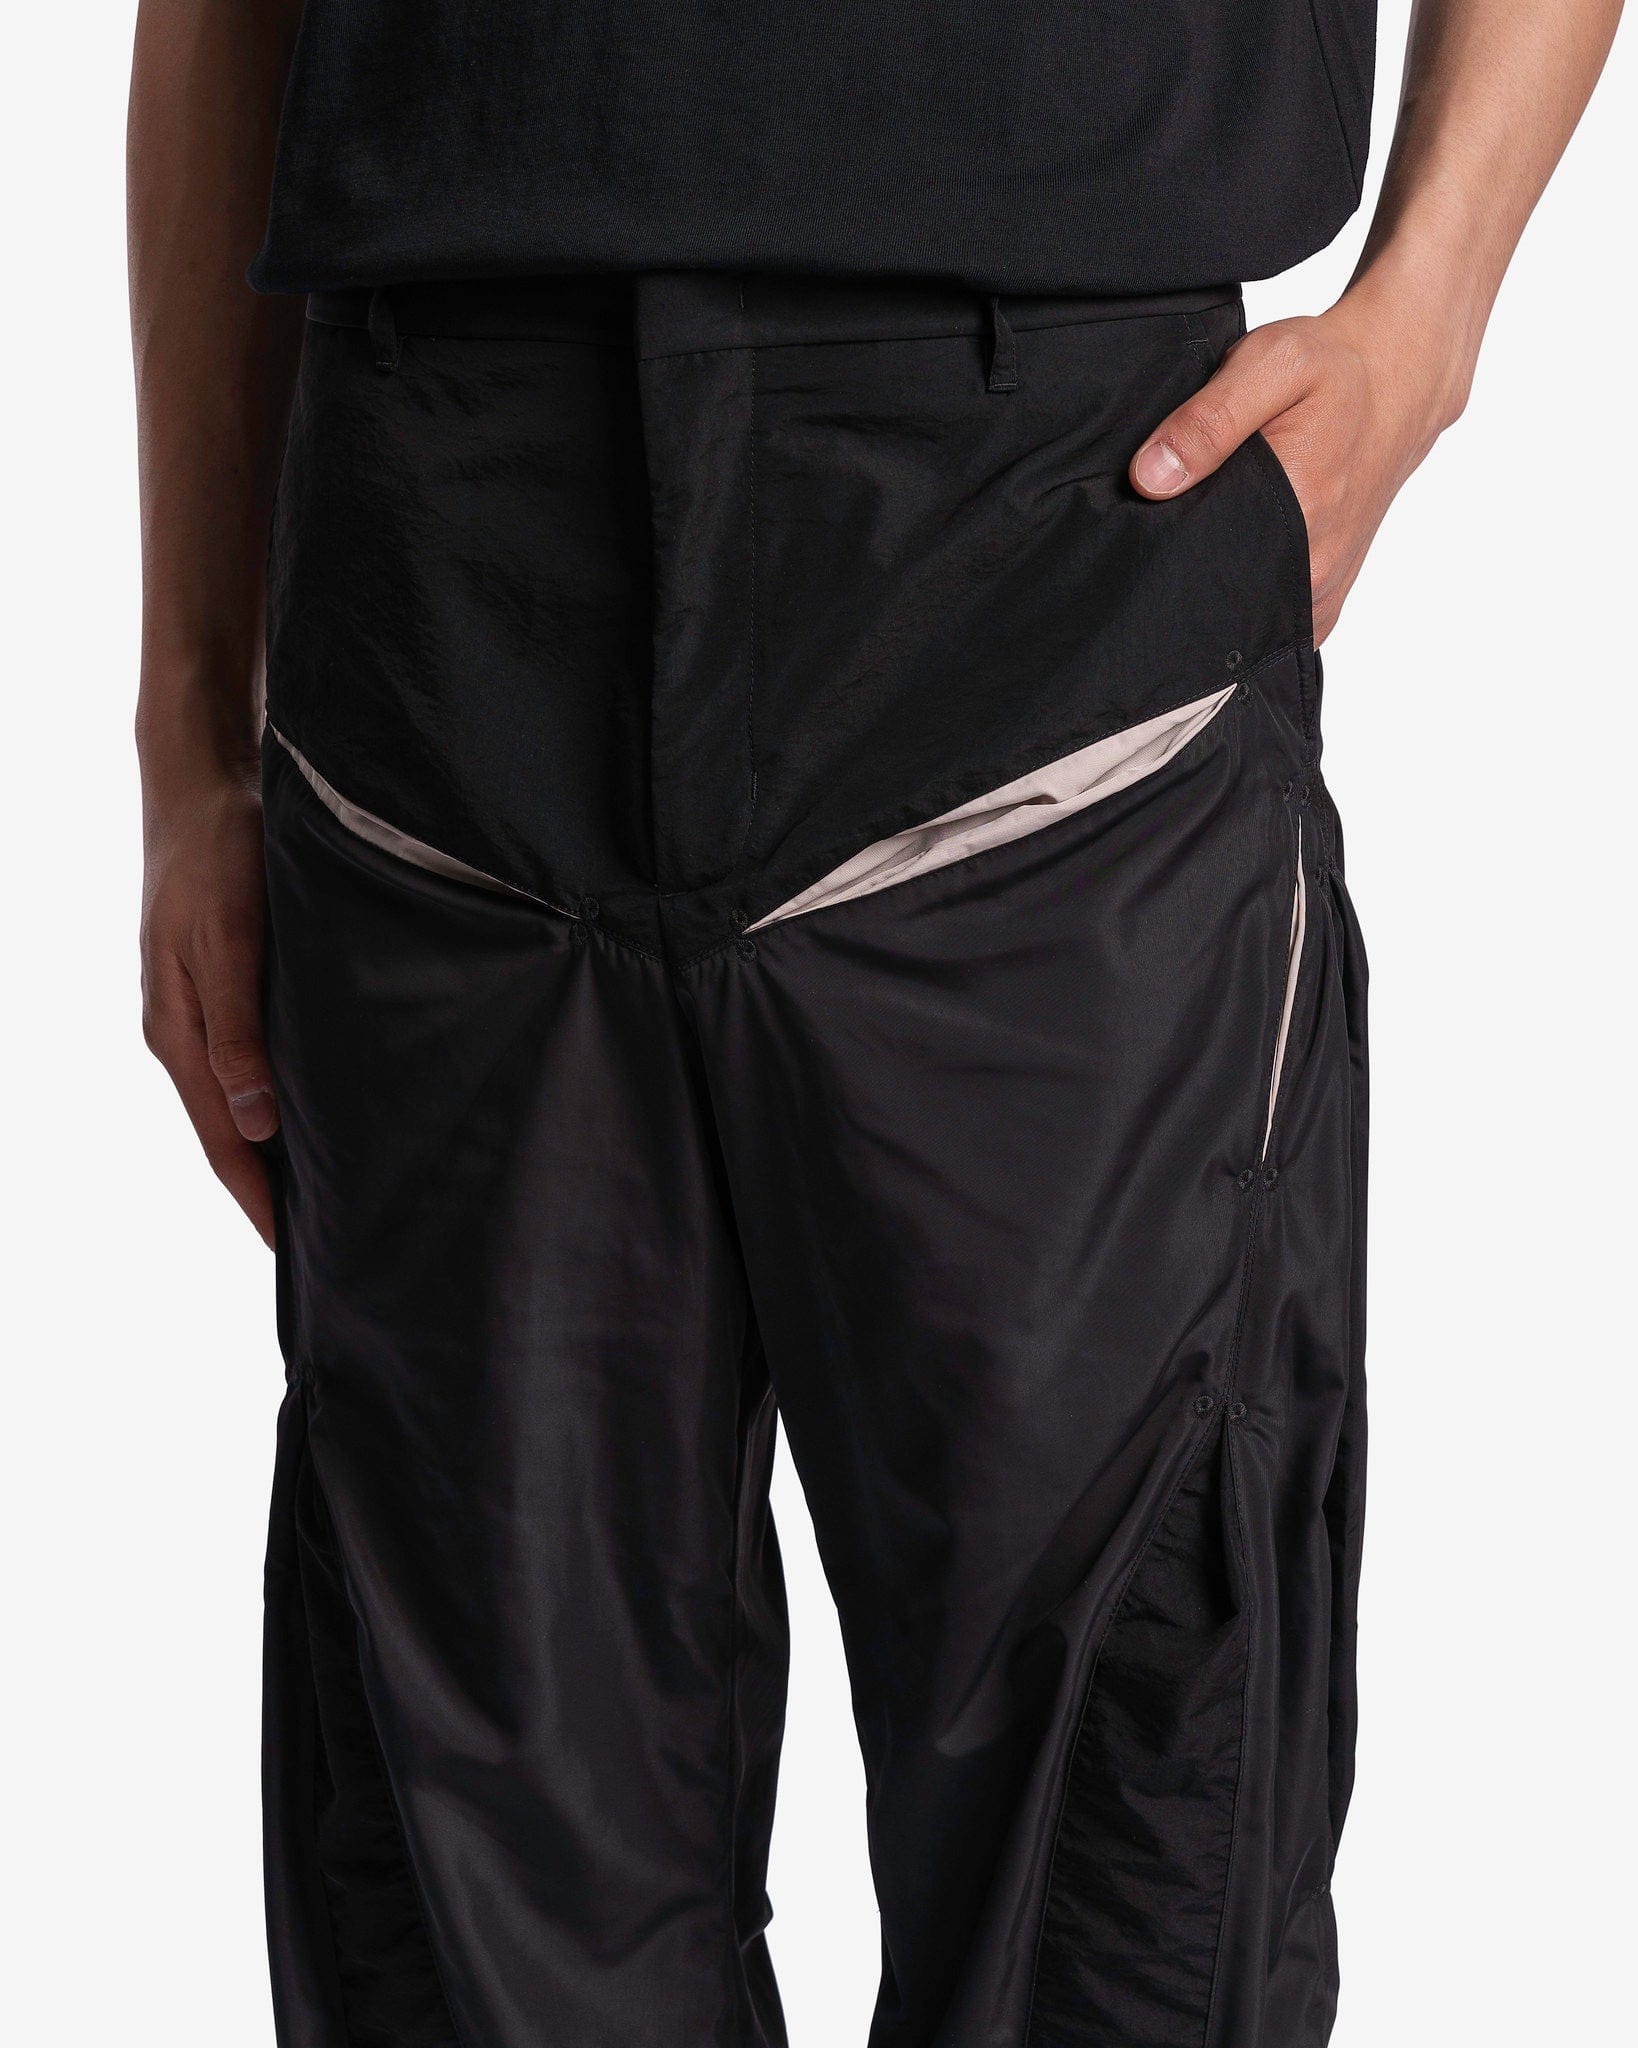 Kusikohc Men's Pants Incision Pants in Black